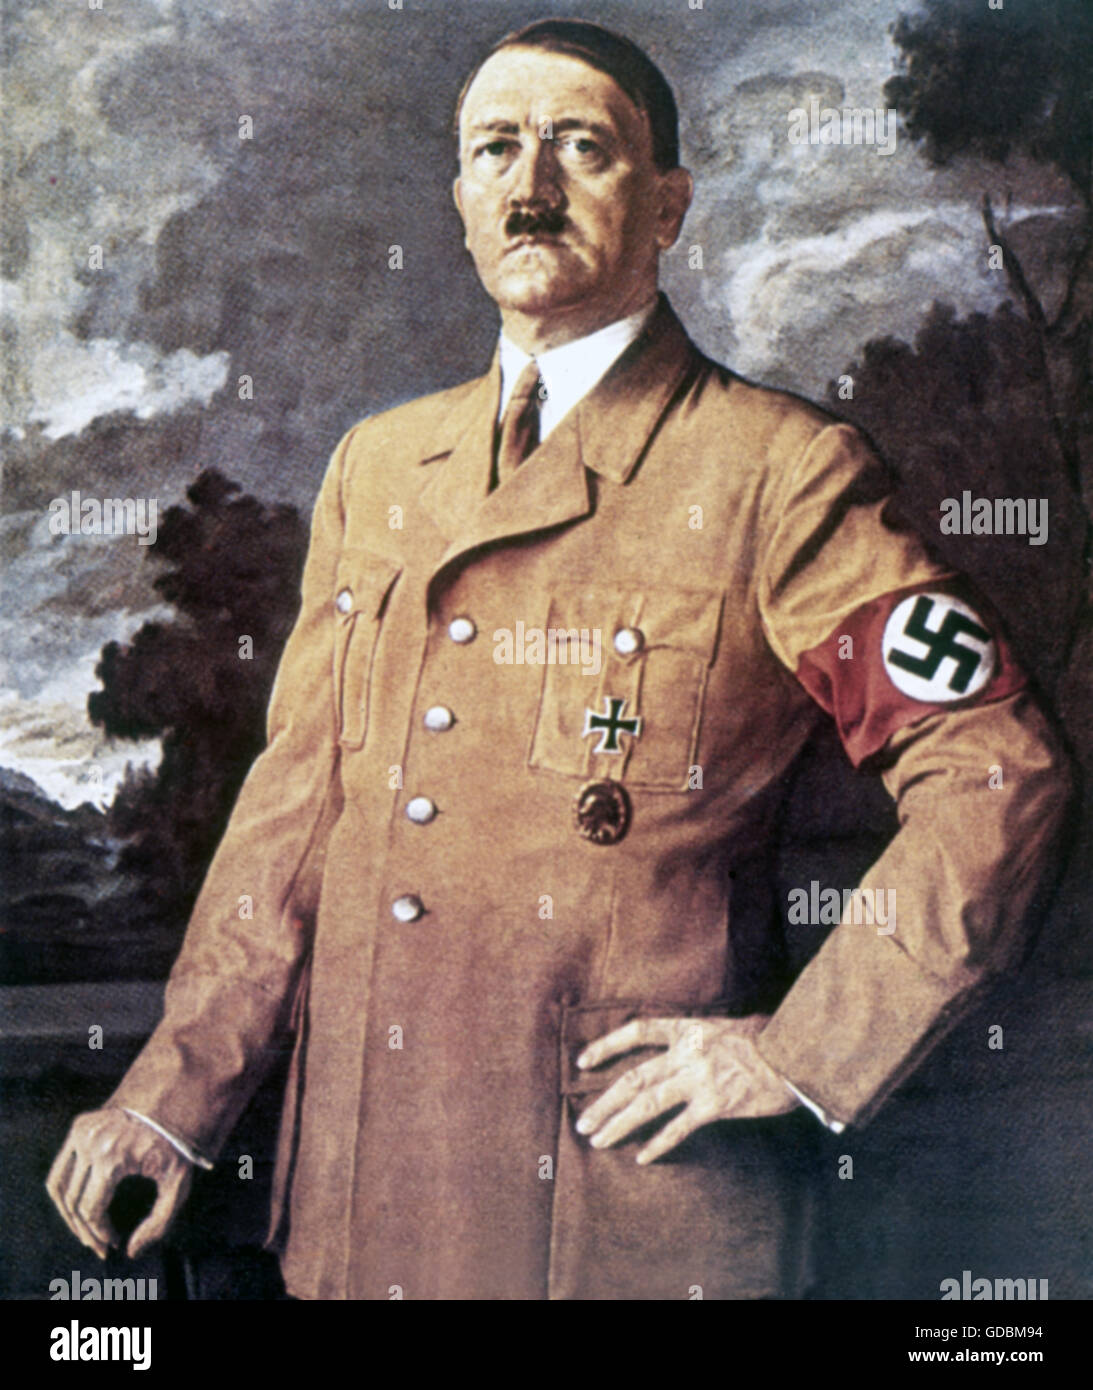 Adolf Hitler In The 1930s